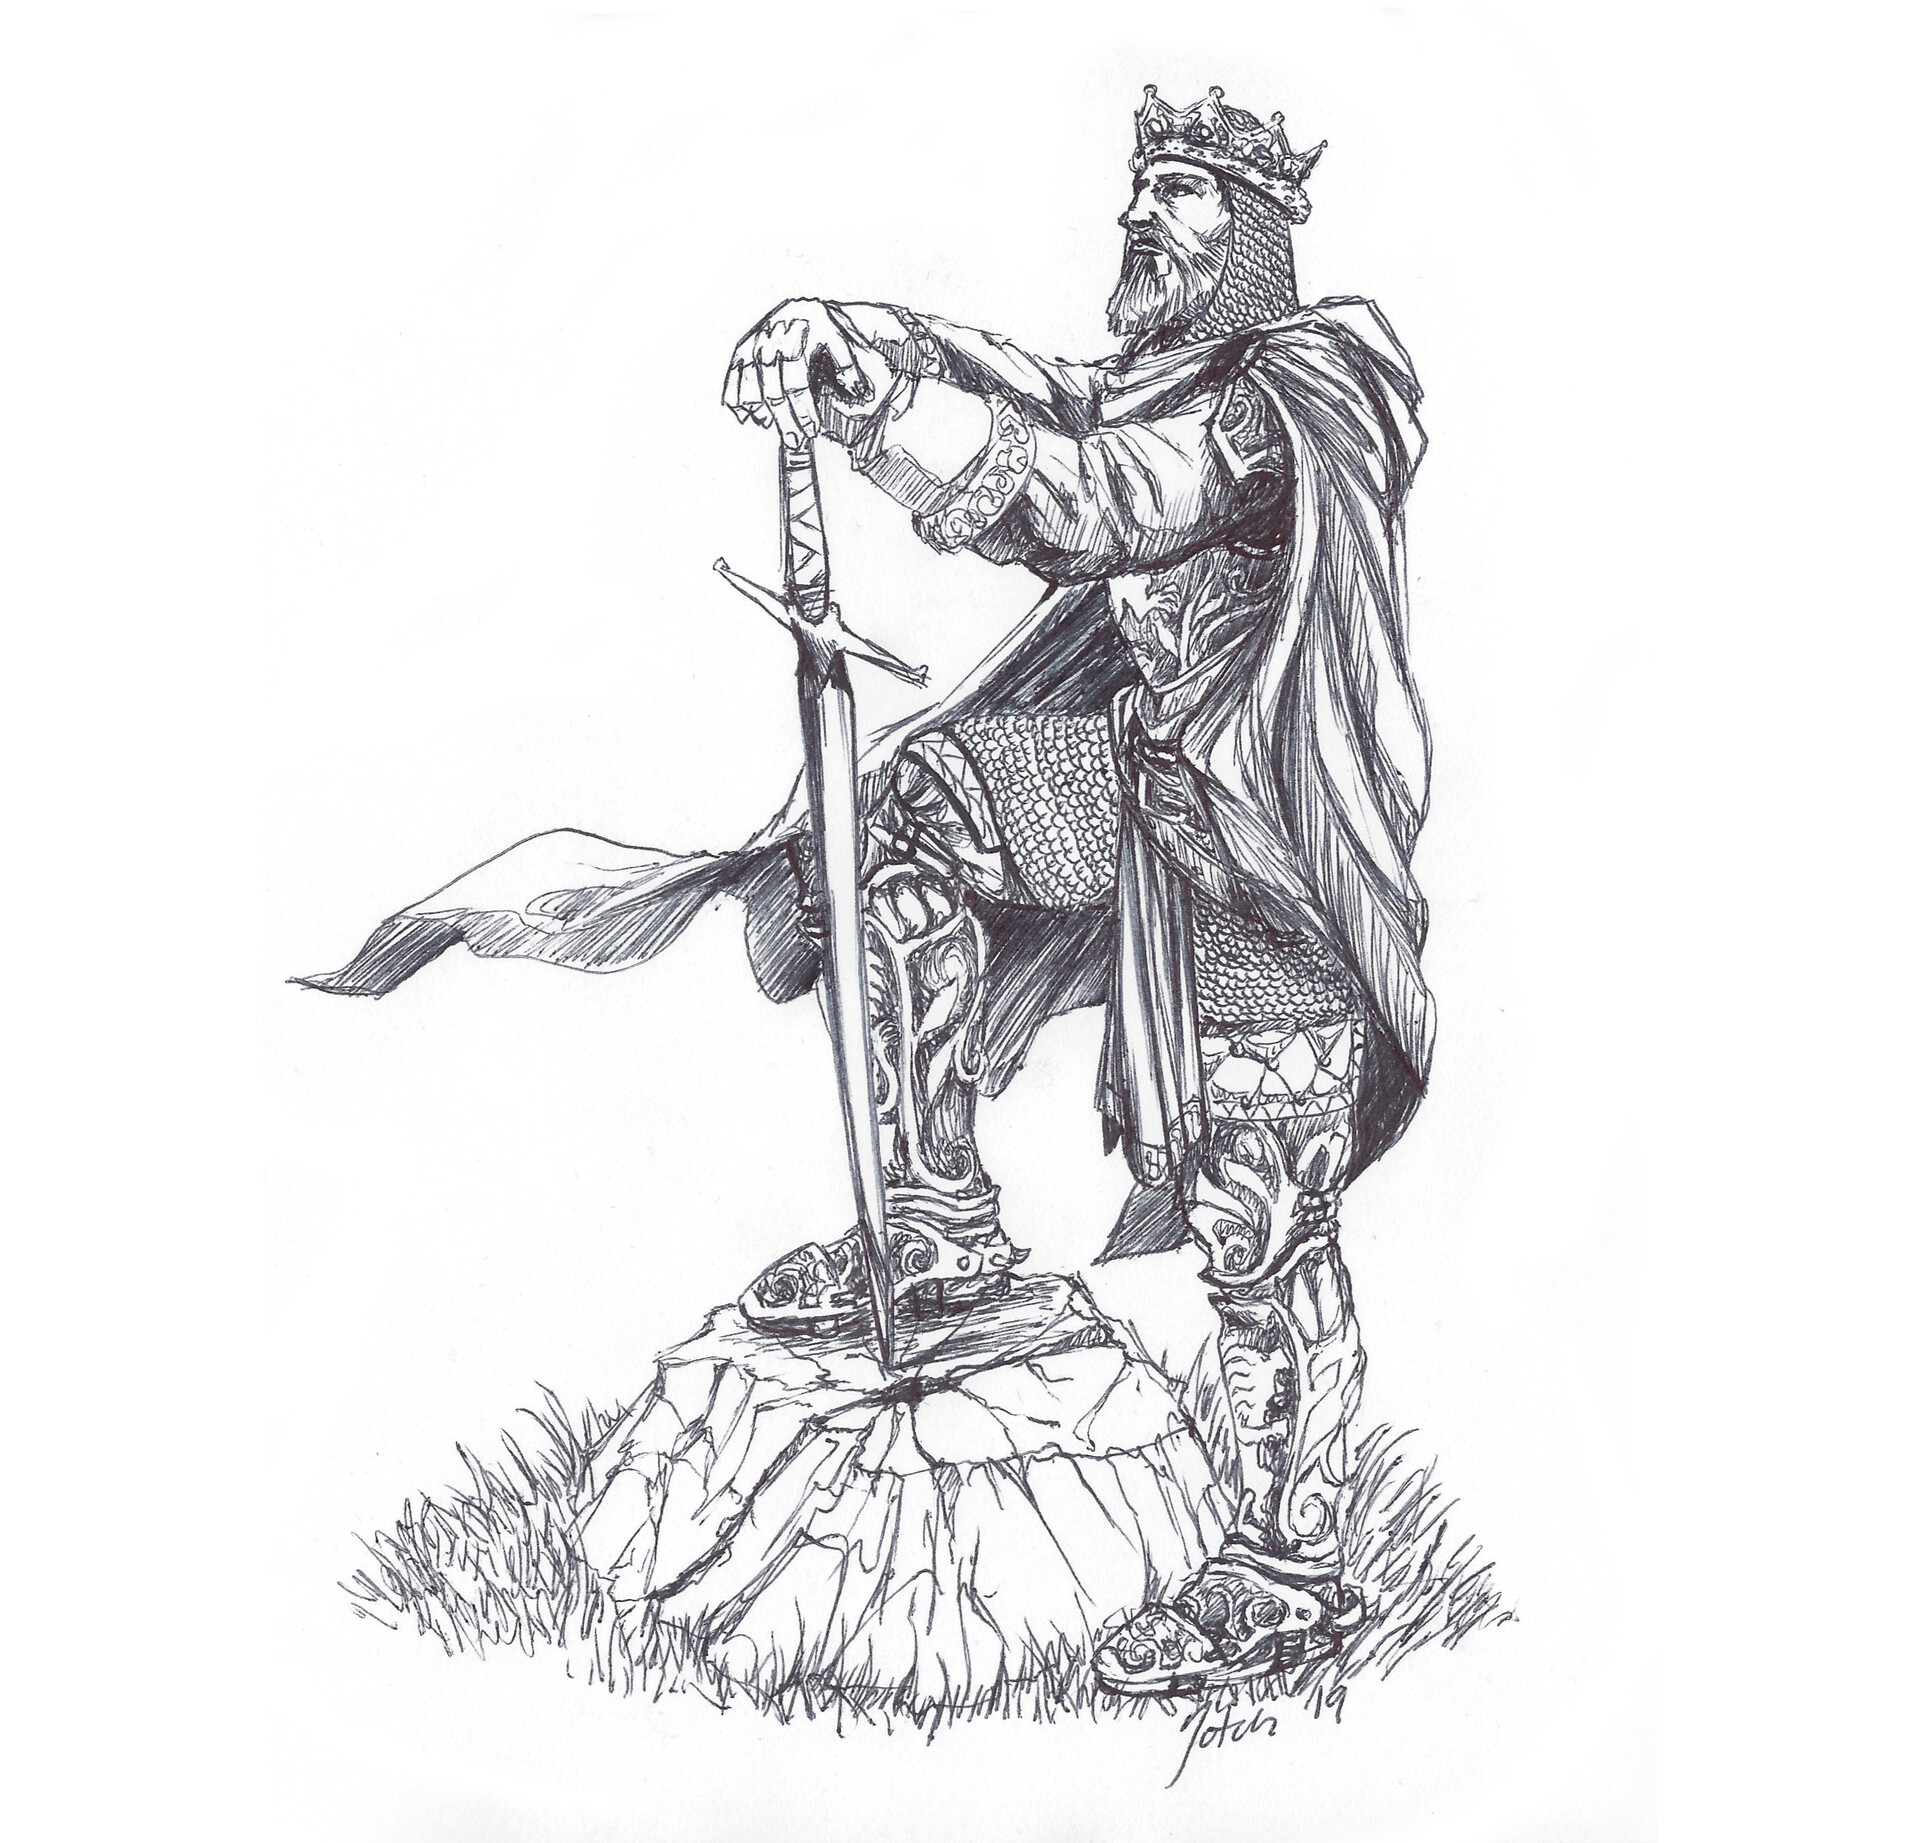 King david of israel front medieval drawing Vector Image